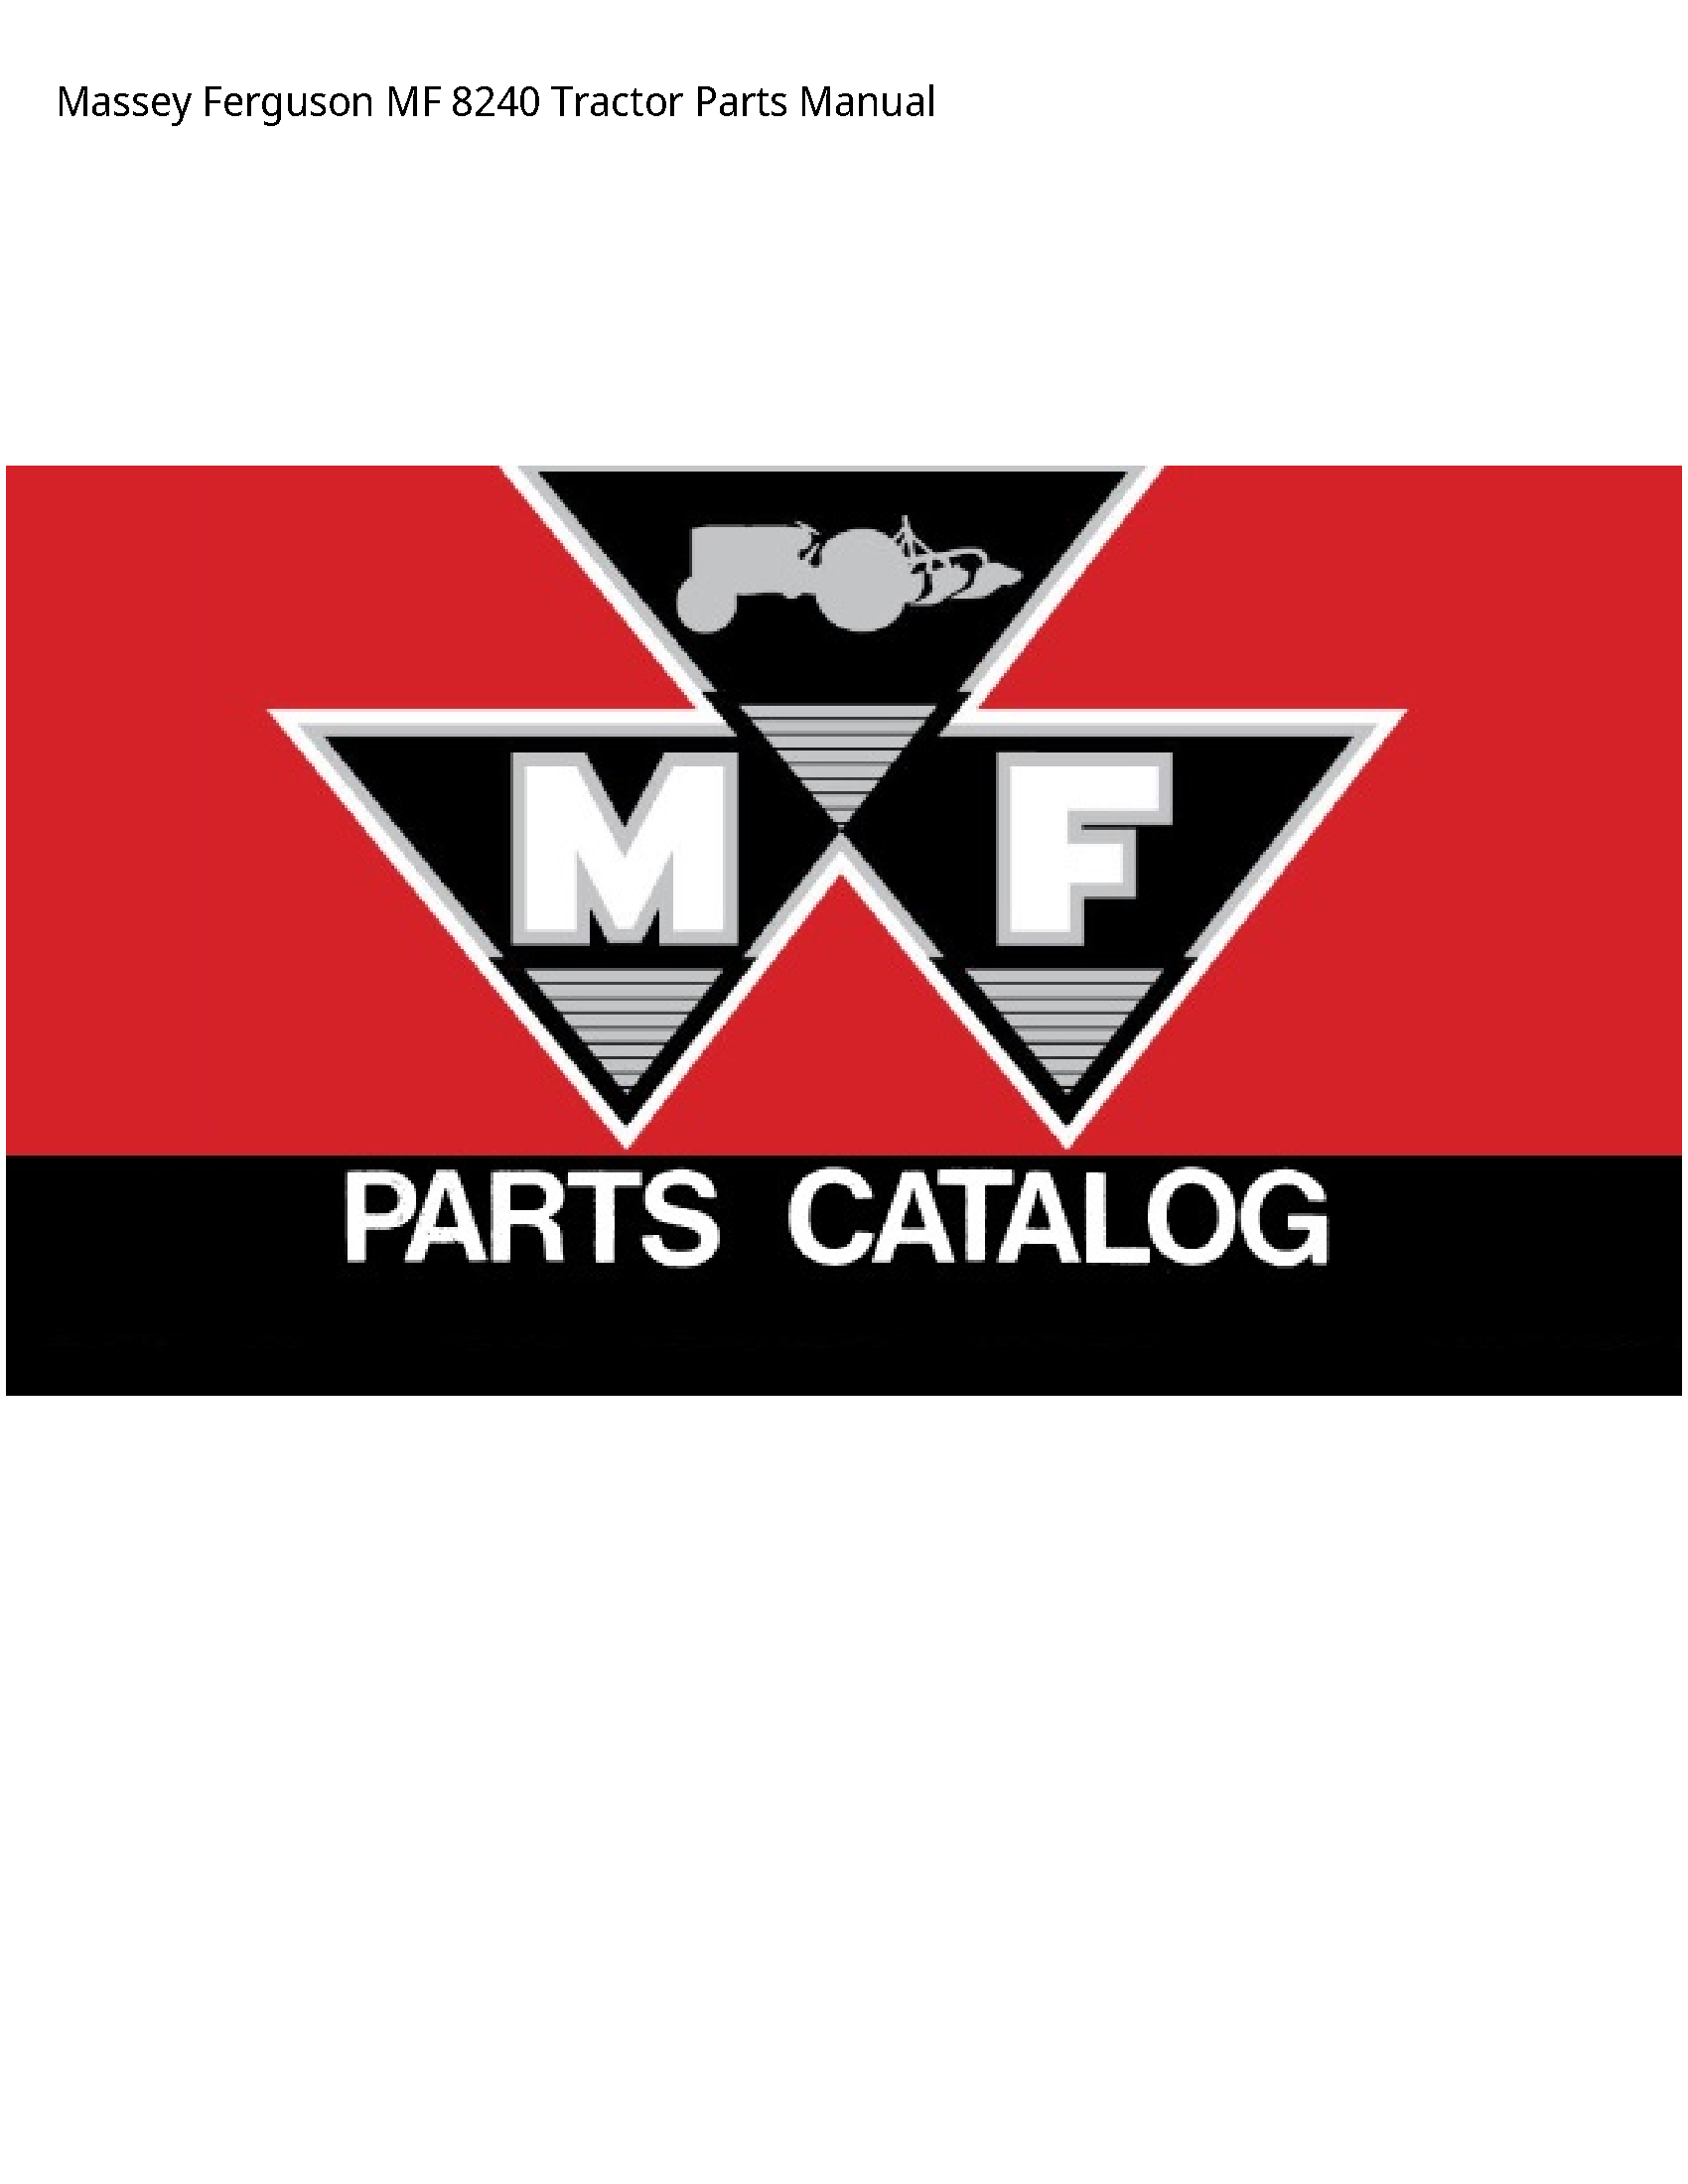 Massey Ferguson 8240 MF Tractor Parts manual